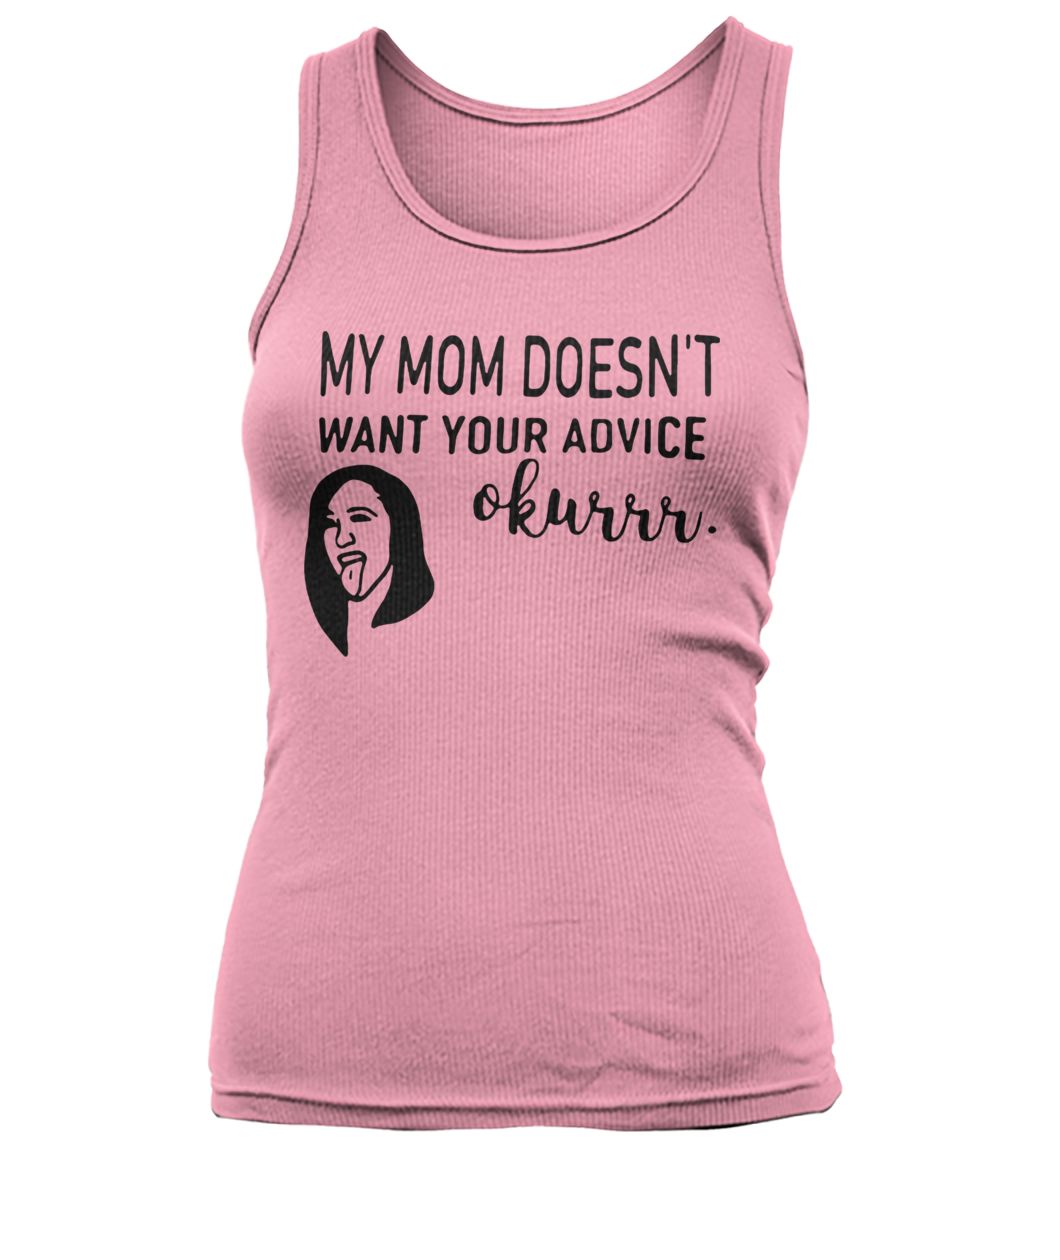 Cardi B my mom doesn't want your advice okurrr women's tank top